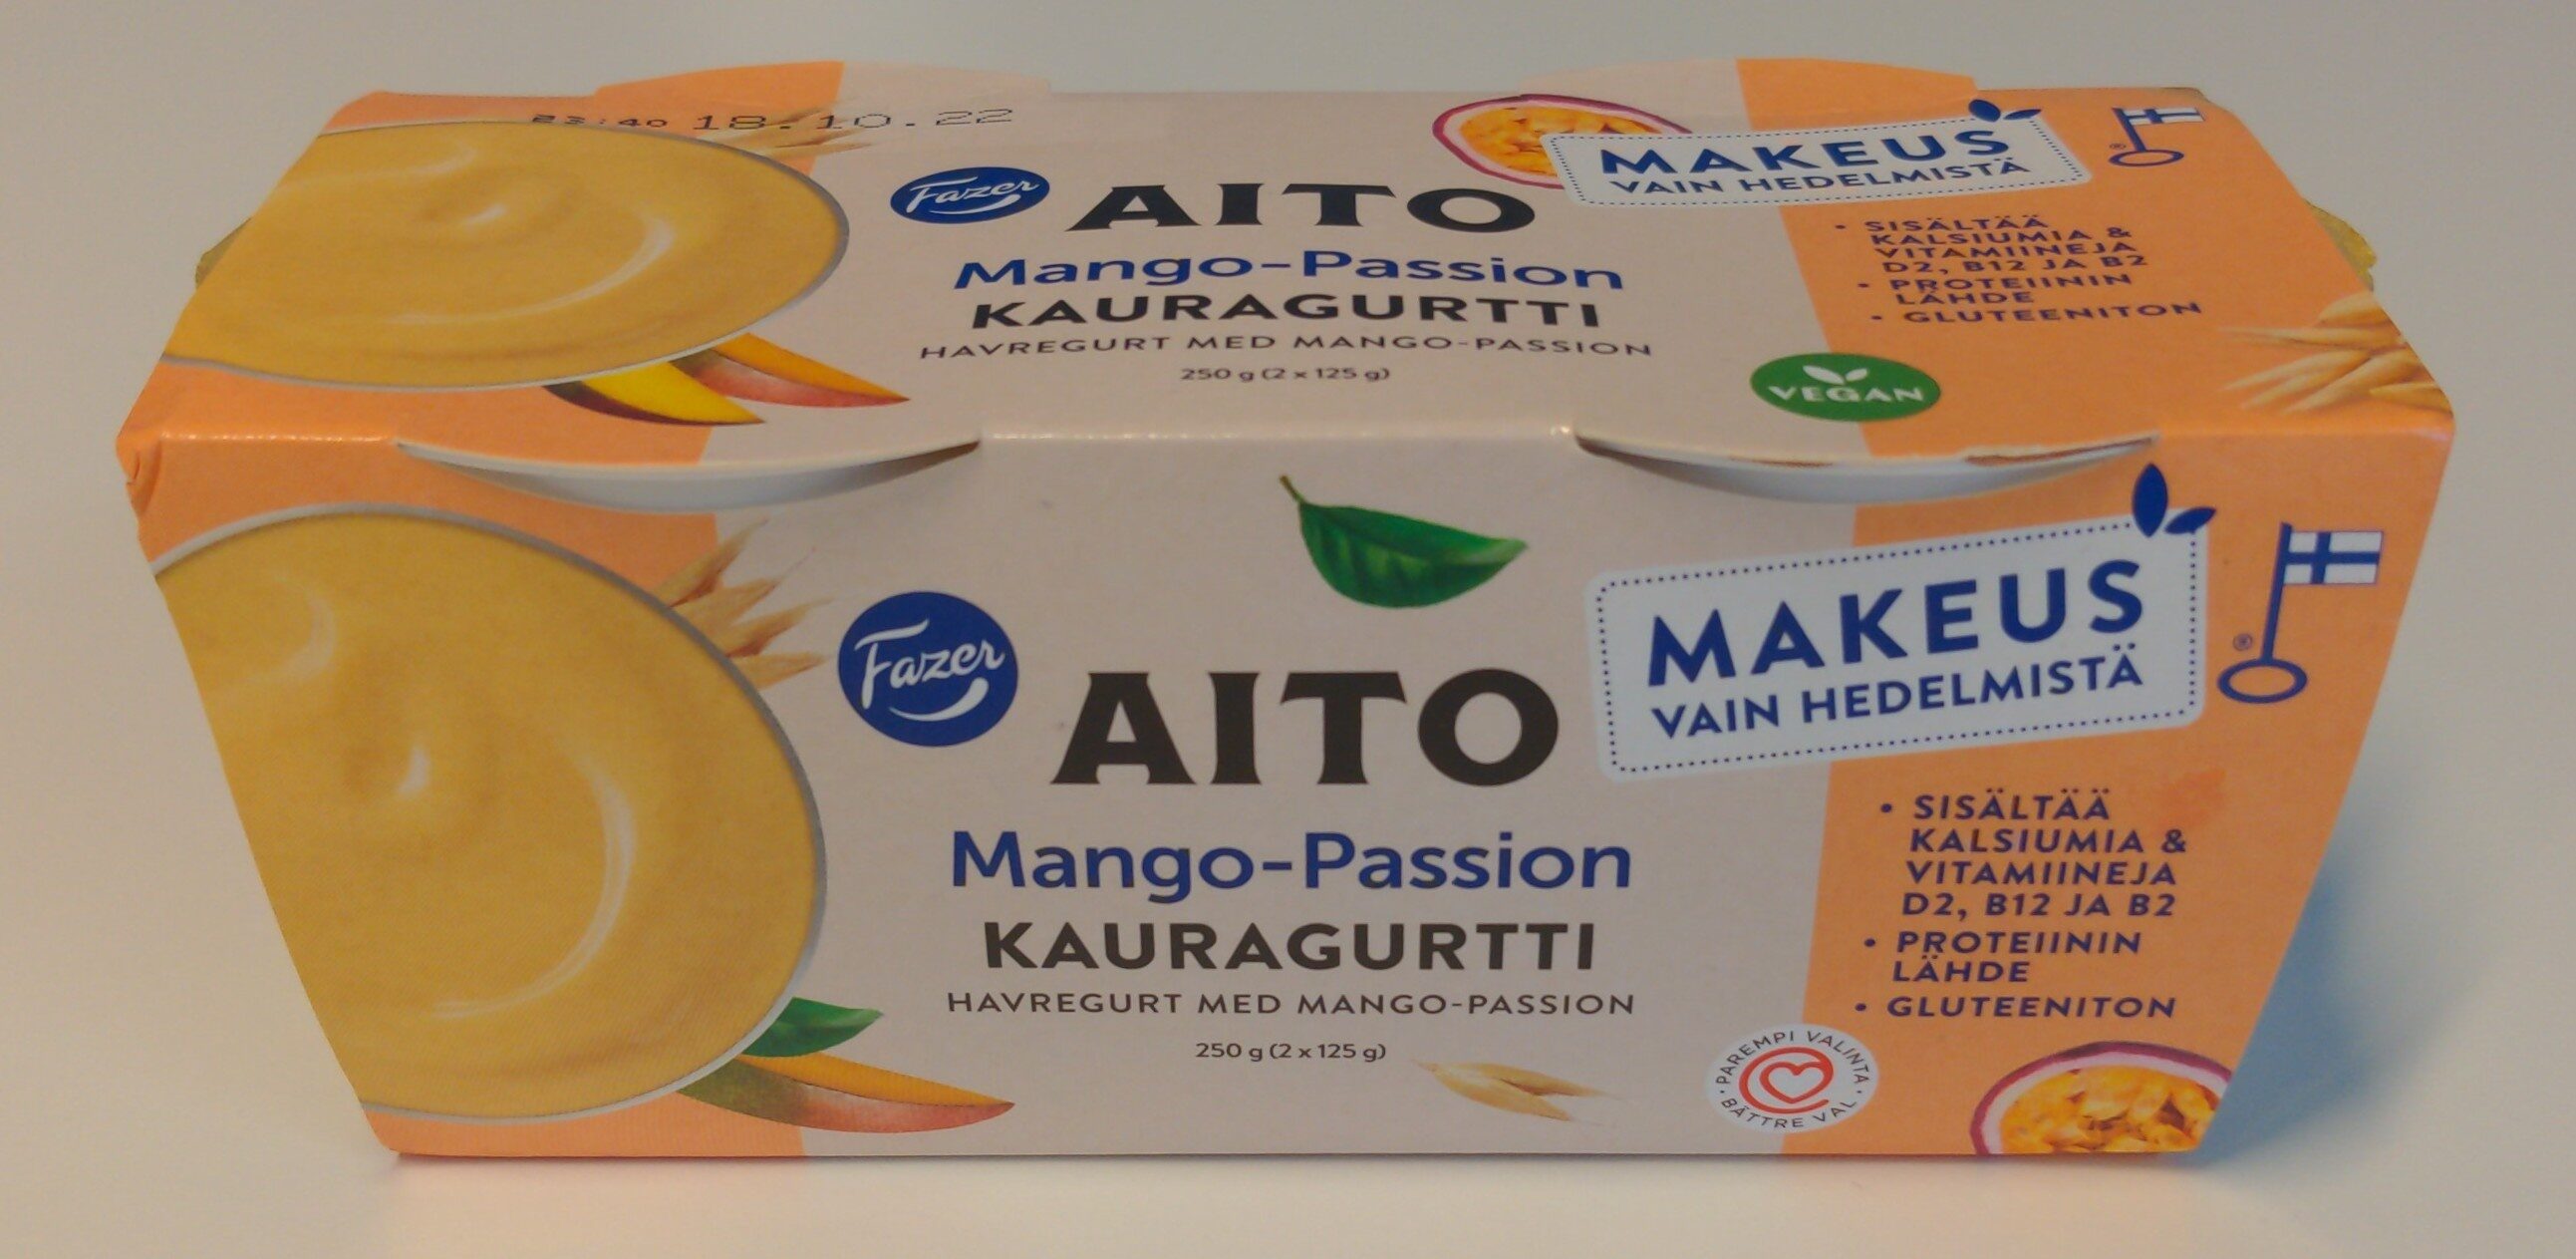 Aito kauragurtti mango-passion - Produkt - fi